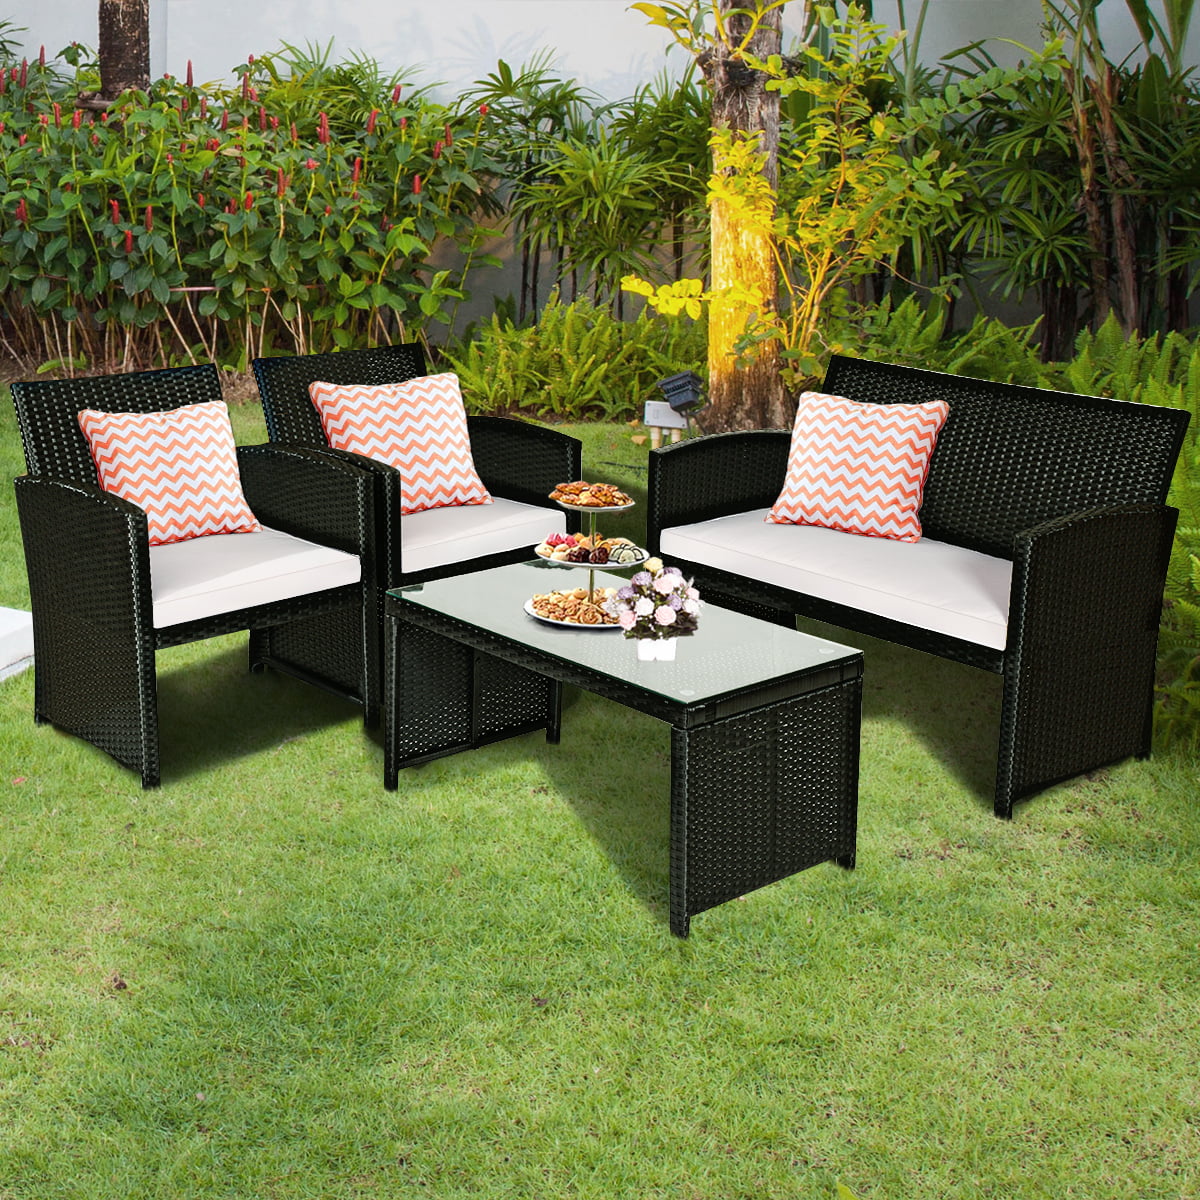 Rattan Wicker Square Glass Top Tea Table Patio Garden Outdoor Furniture Black 